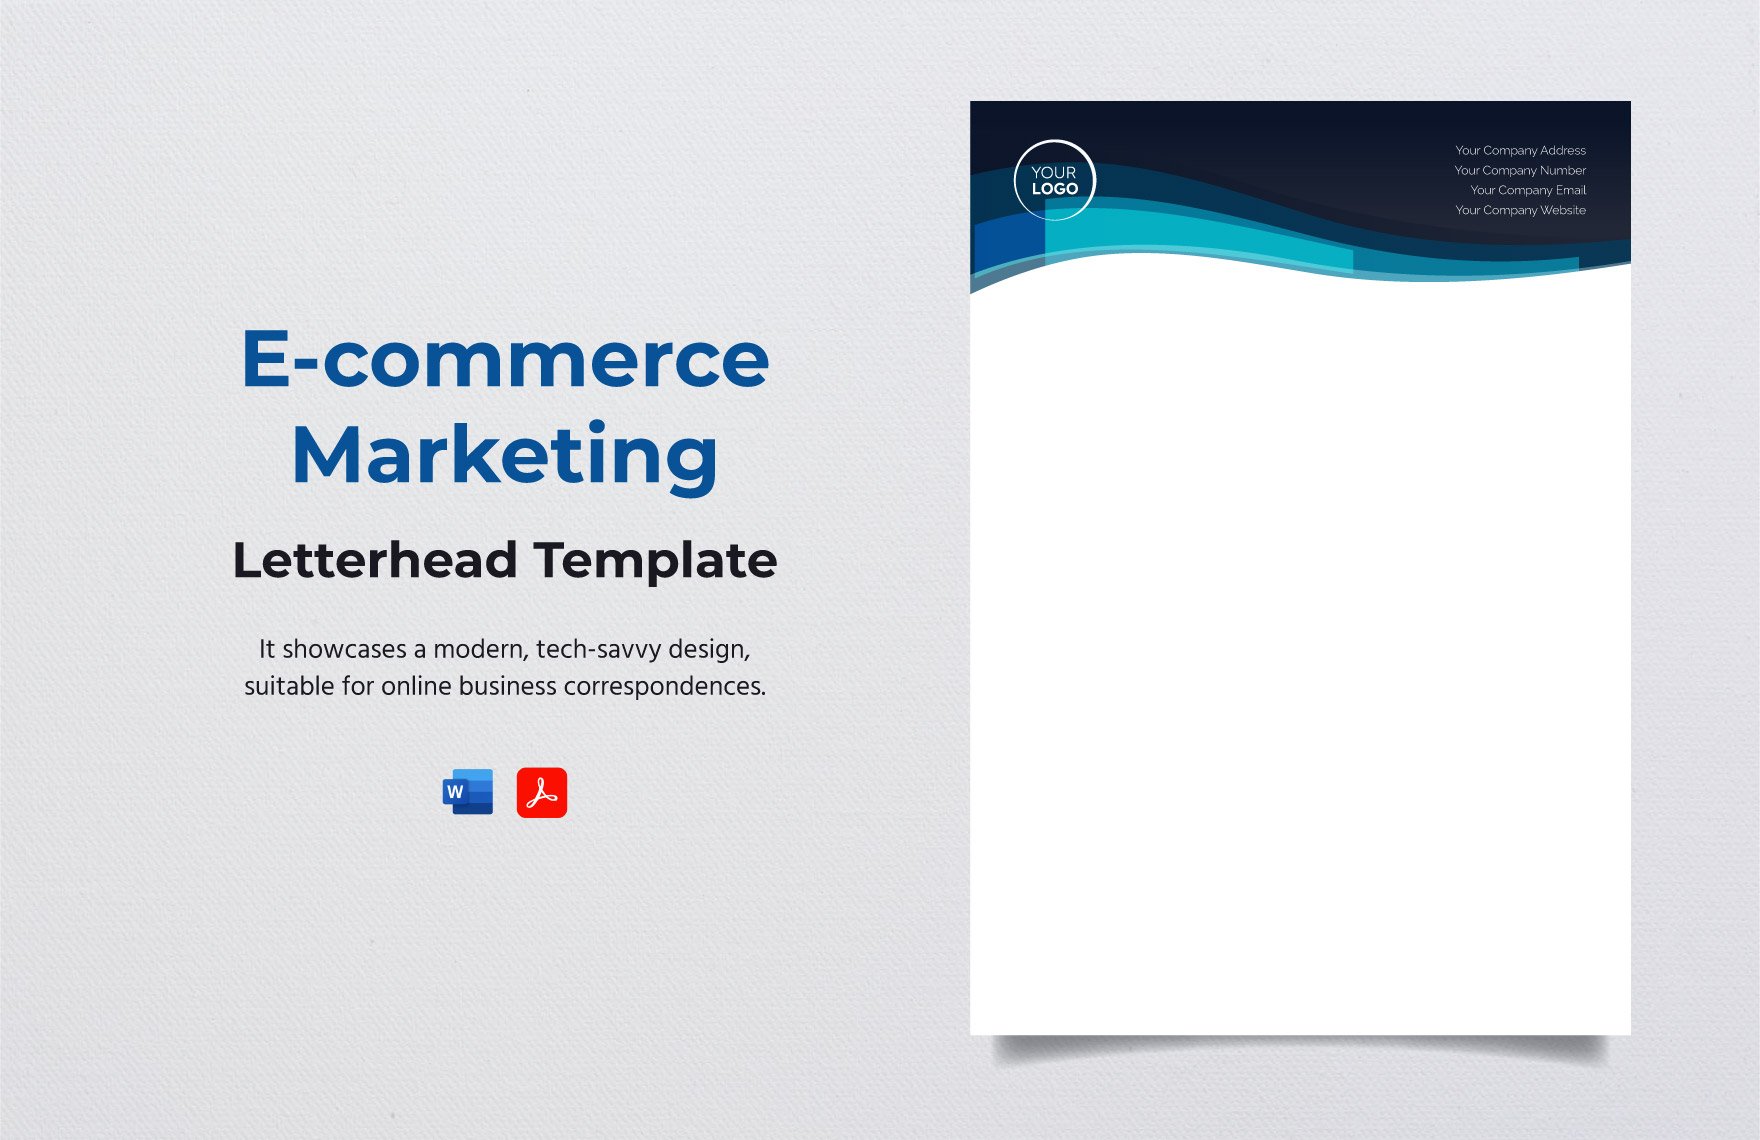 E-commerce Marketing Letterhead Template